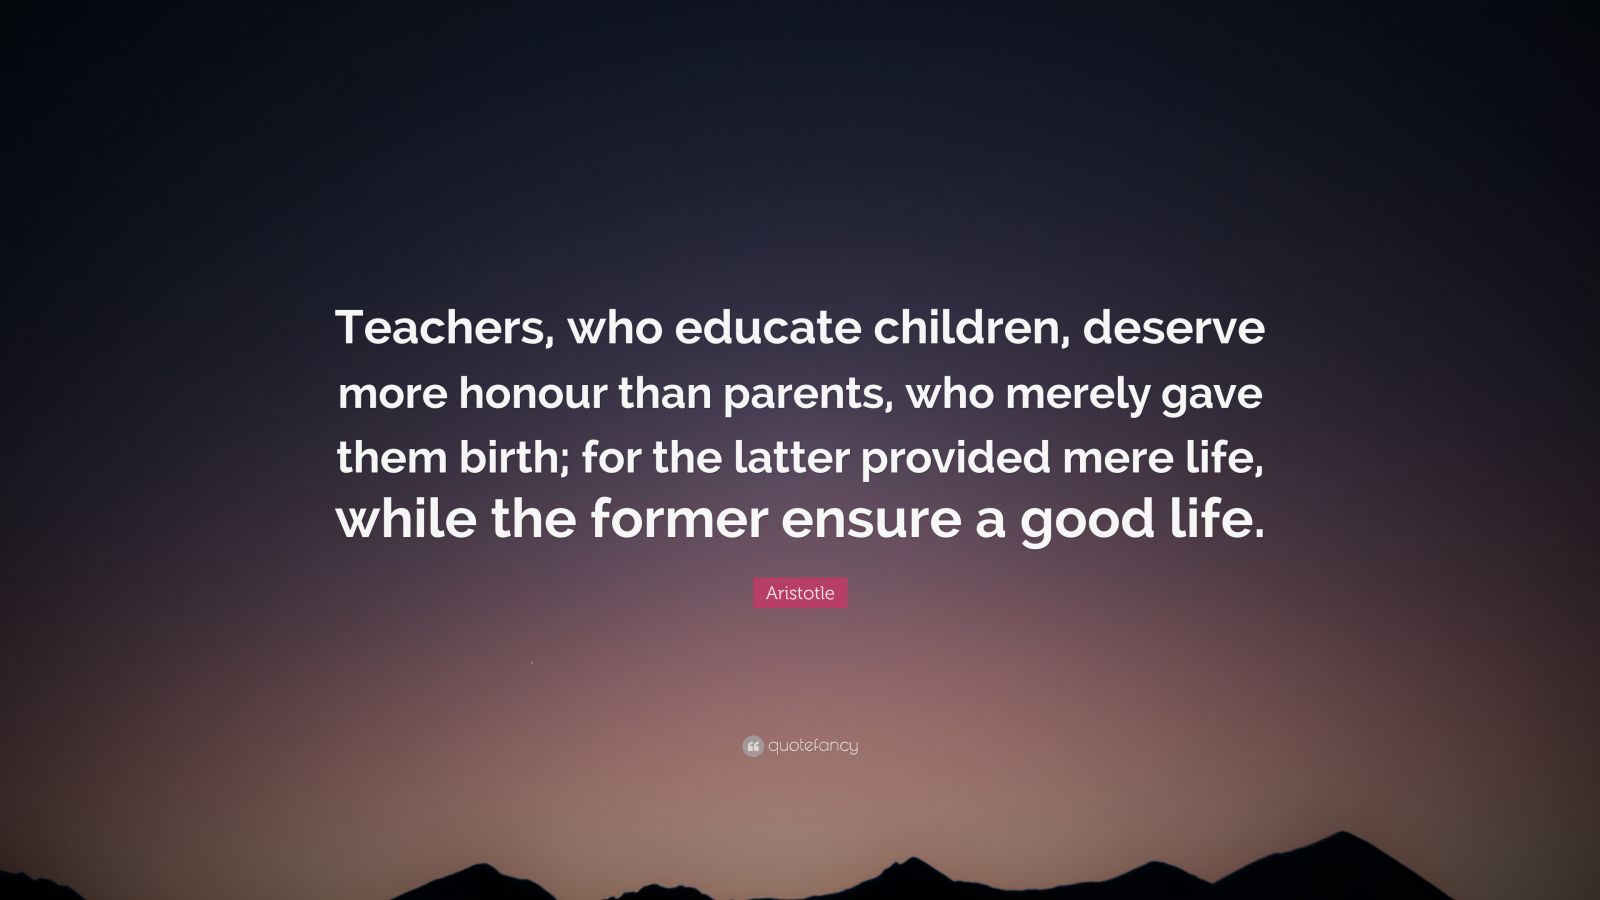 Aristotle Quote: “Teachers, who educate children, deserve more honour ...